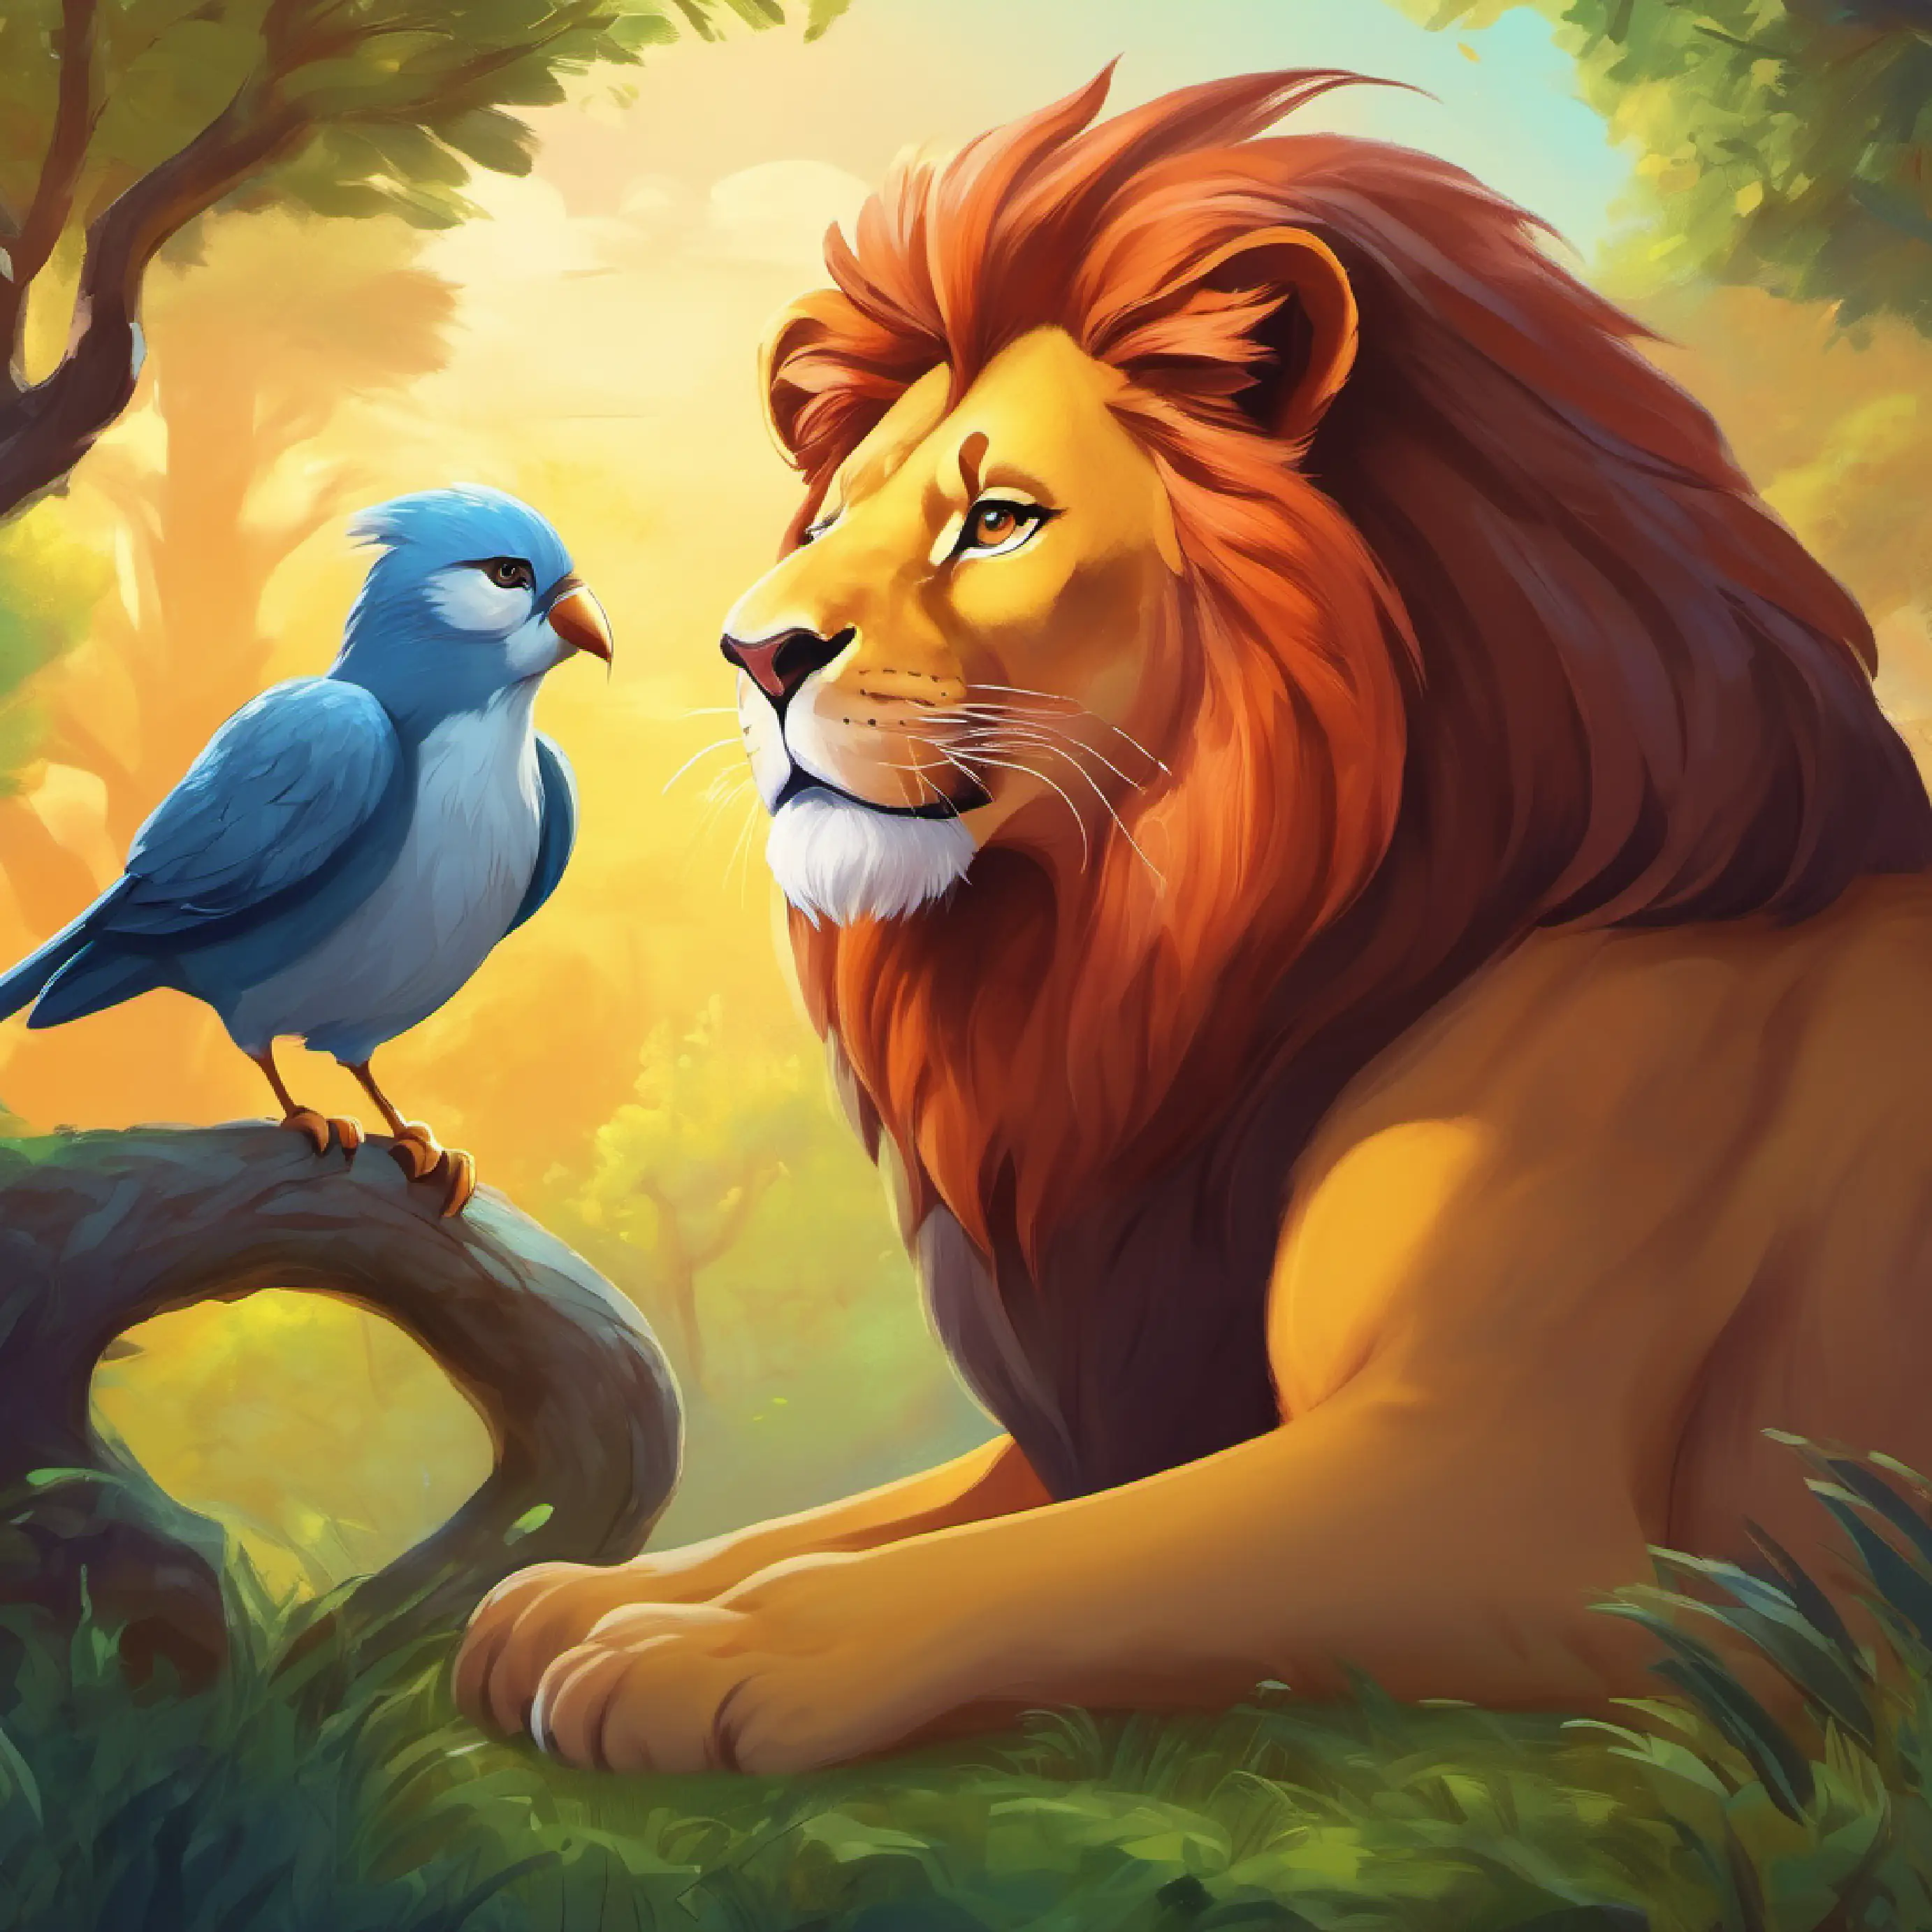 Bird offers lion advice on positive communication.